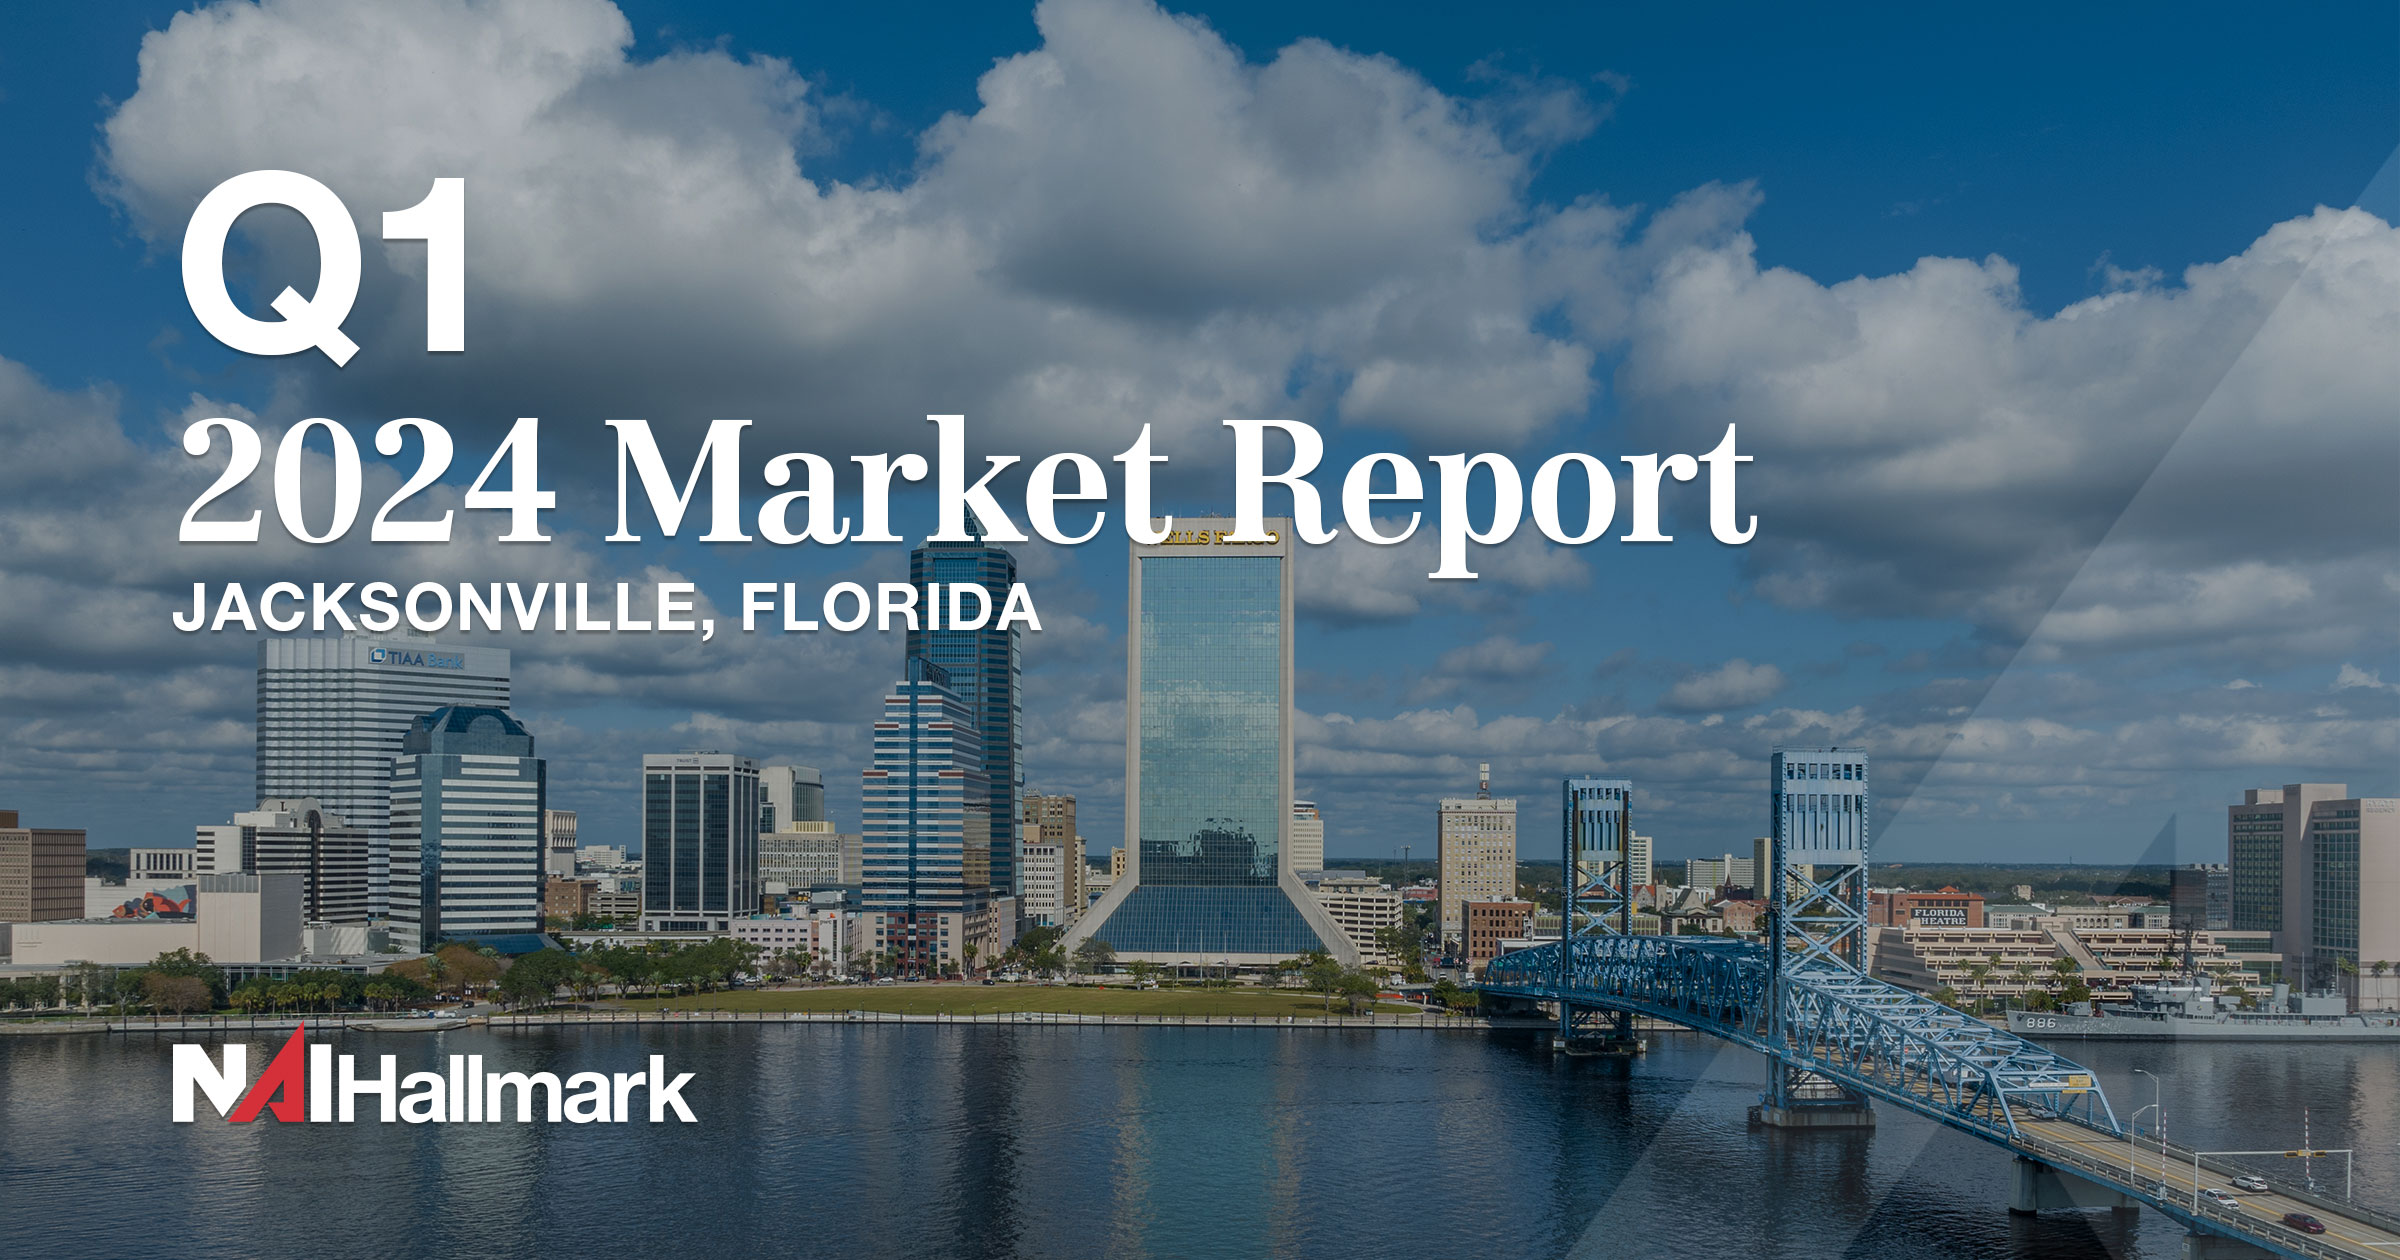 Jacksonville Market Report 3rd Quarter 2023 by NAI Hallmark